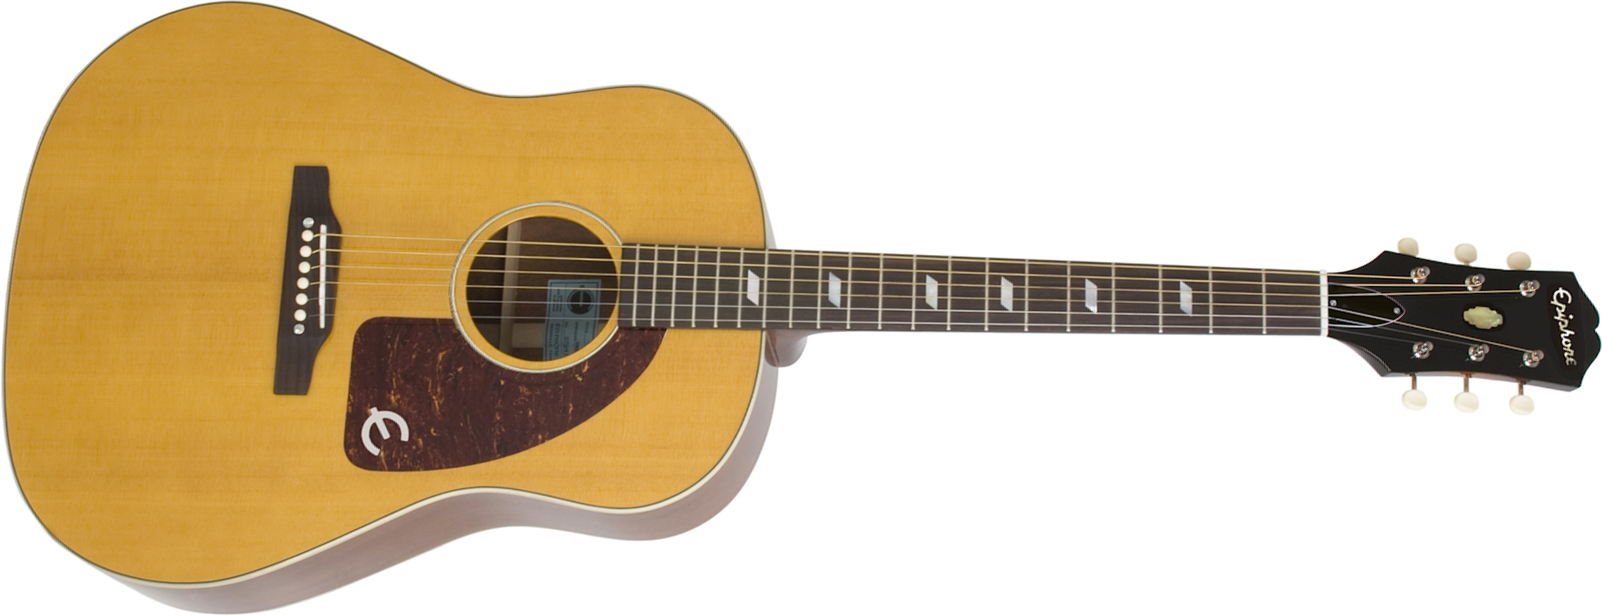 Epiphone Texan Usa Dreadnought Epicea Acajou Rw - Antique Natural - Electro acoustic guitar - Main picture